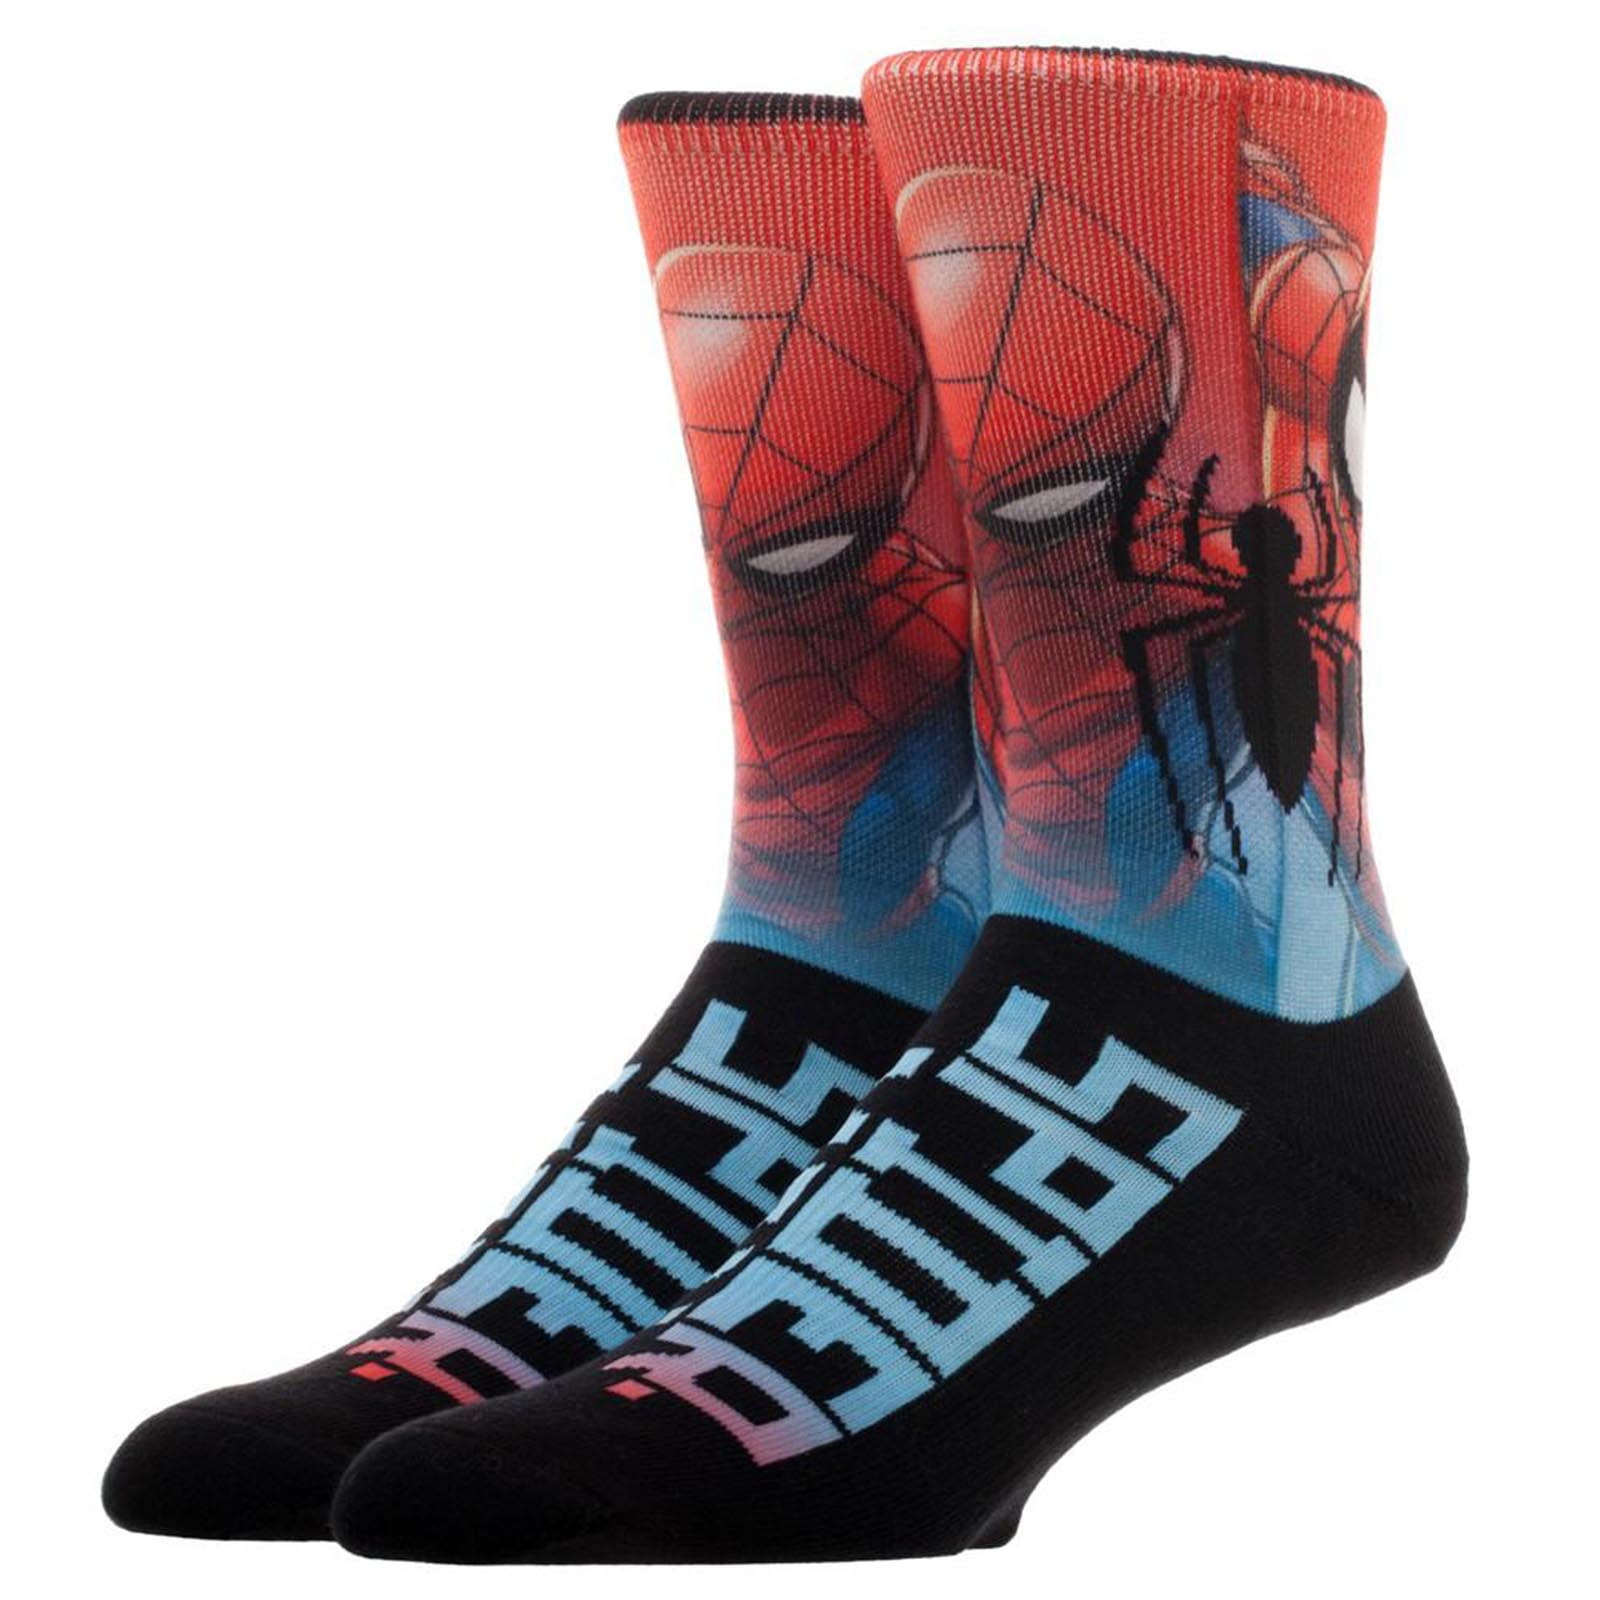 Spider-Man Socks Marvel Comics Size 6-11 Brand New 1 pair 